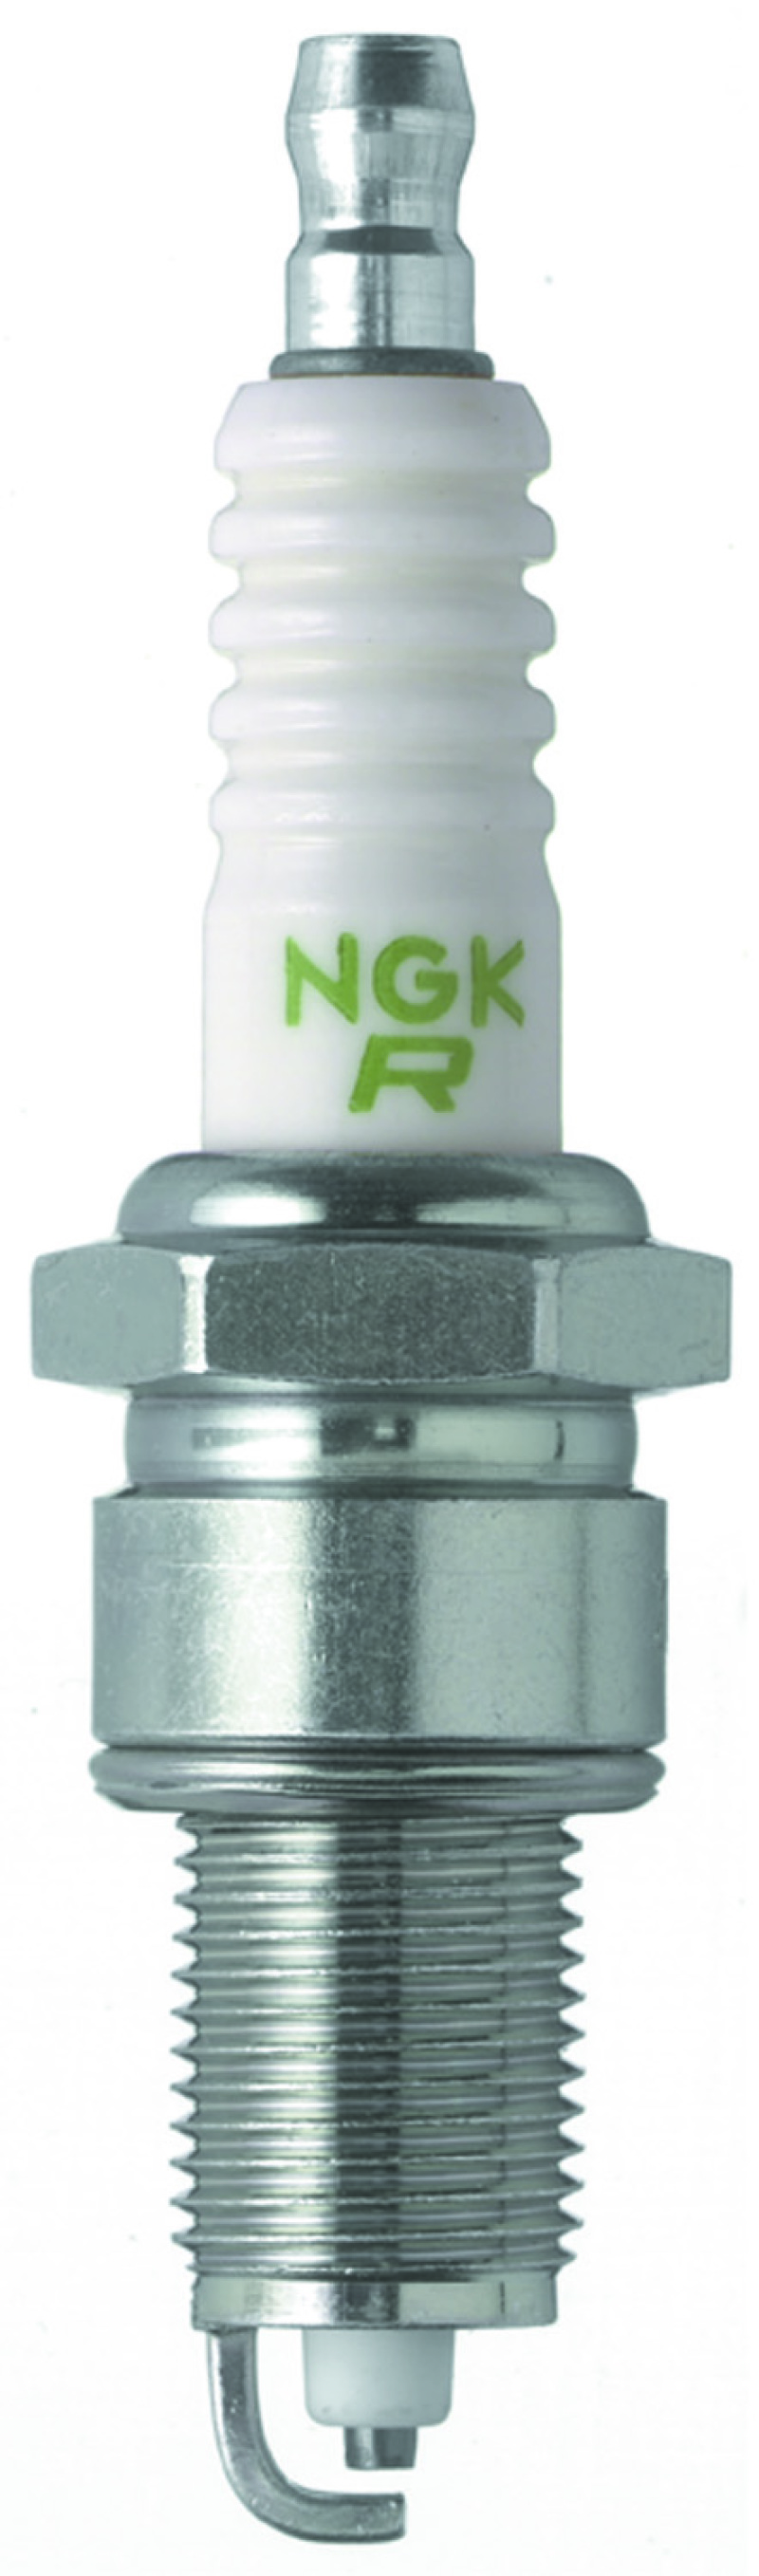 NGK V-Power Spark Plug Box of 4 (ZGR5A-4) - 90178